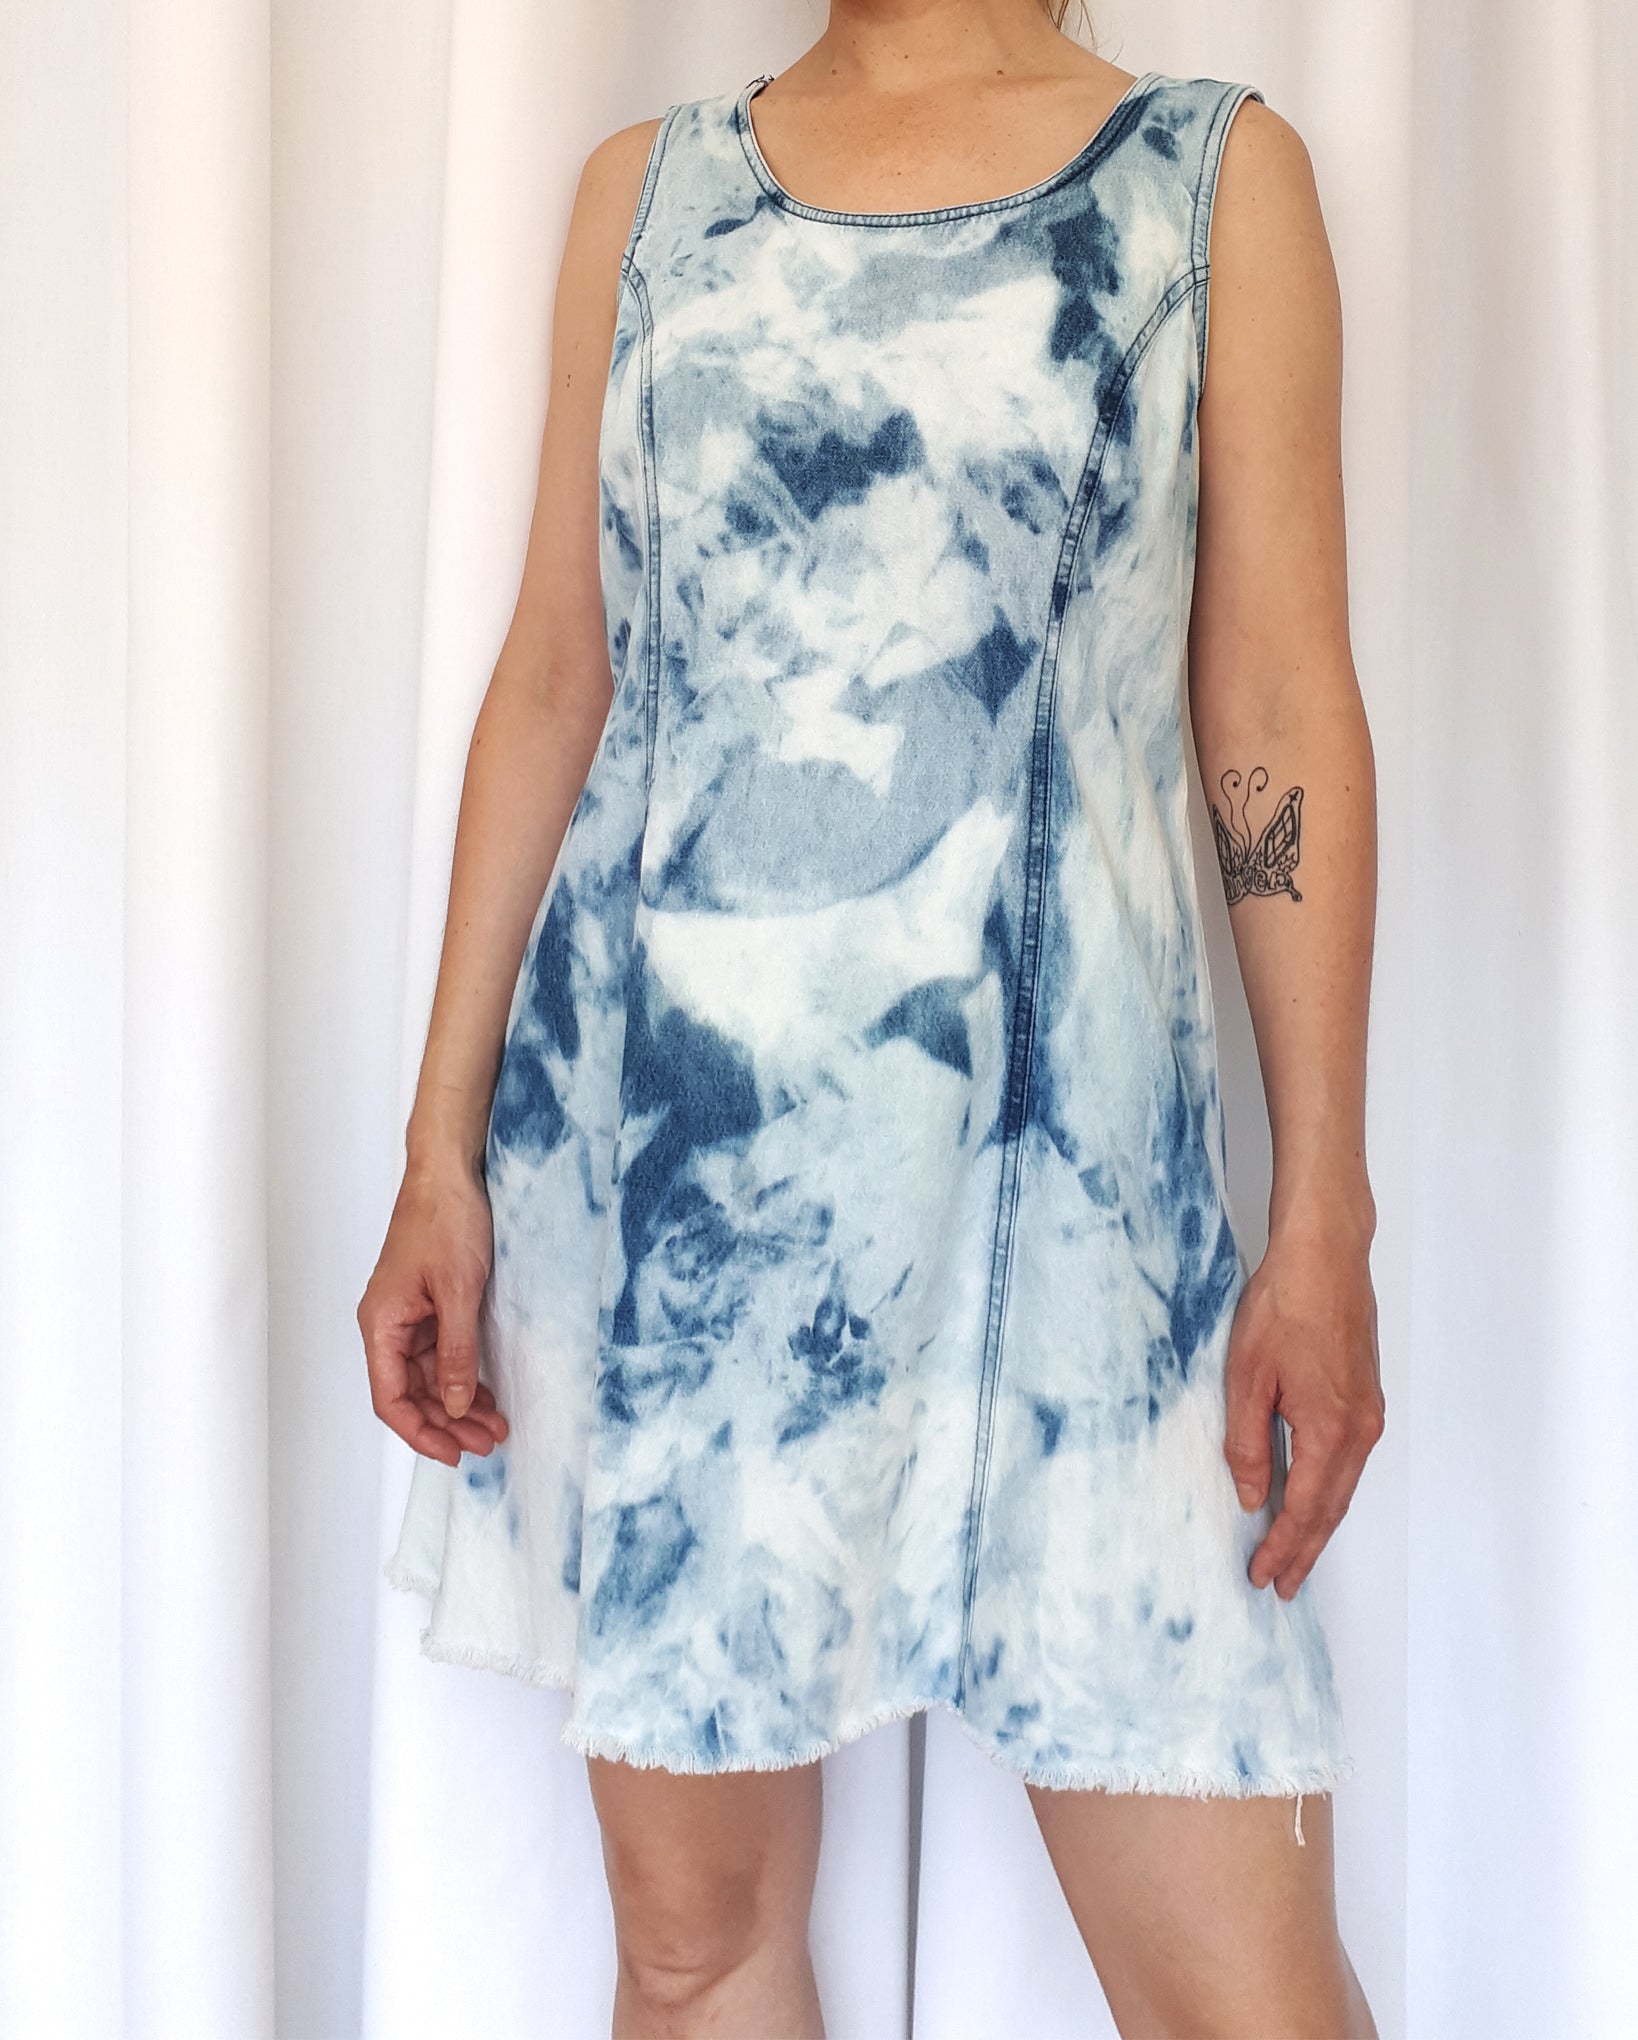 Covet Rework / Upcycled Denim Bleached Dress Size Medium